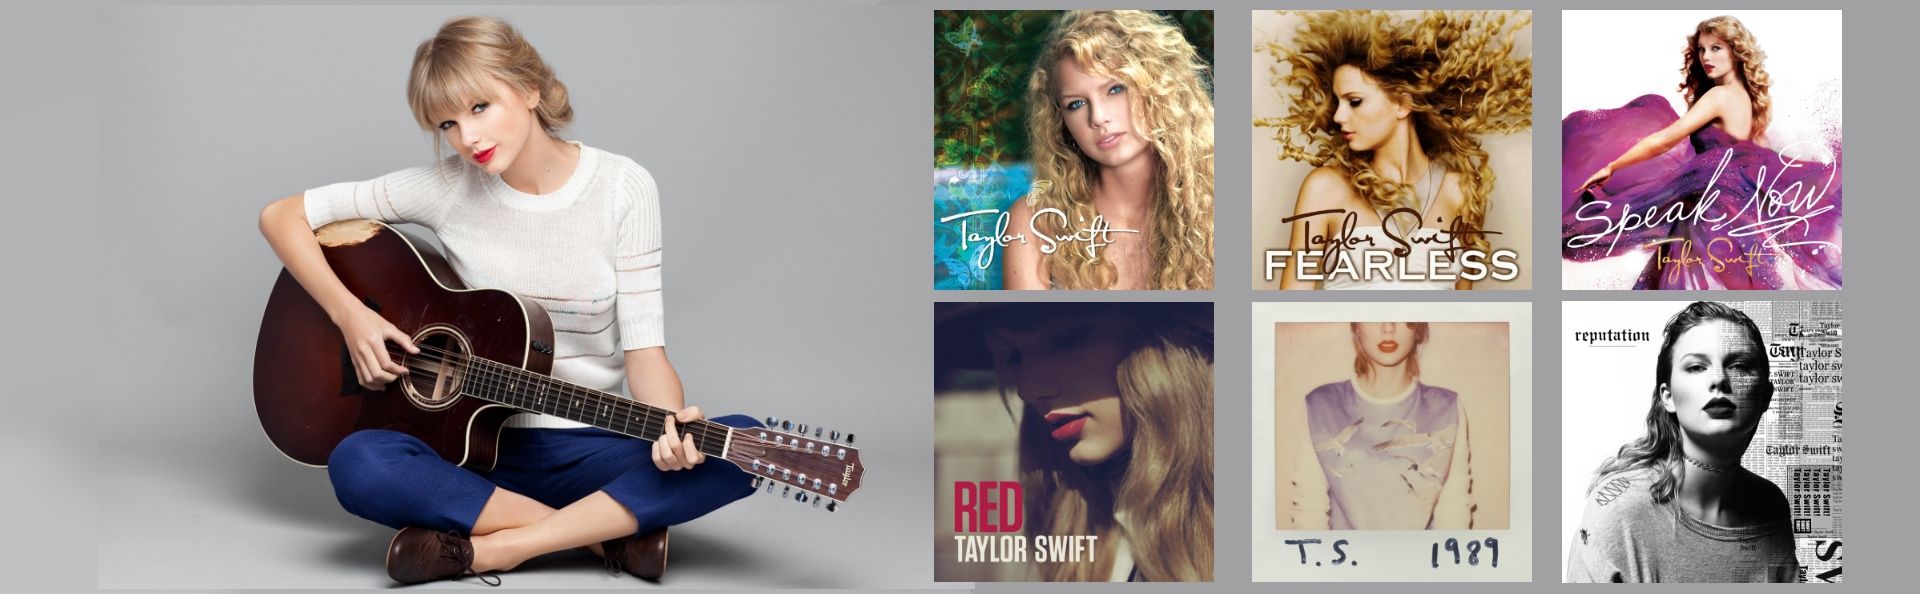 The Evolution of Taylor Swift Album Cover Design